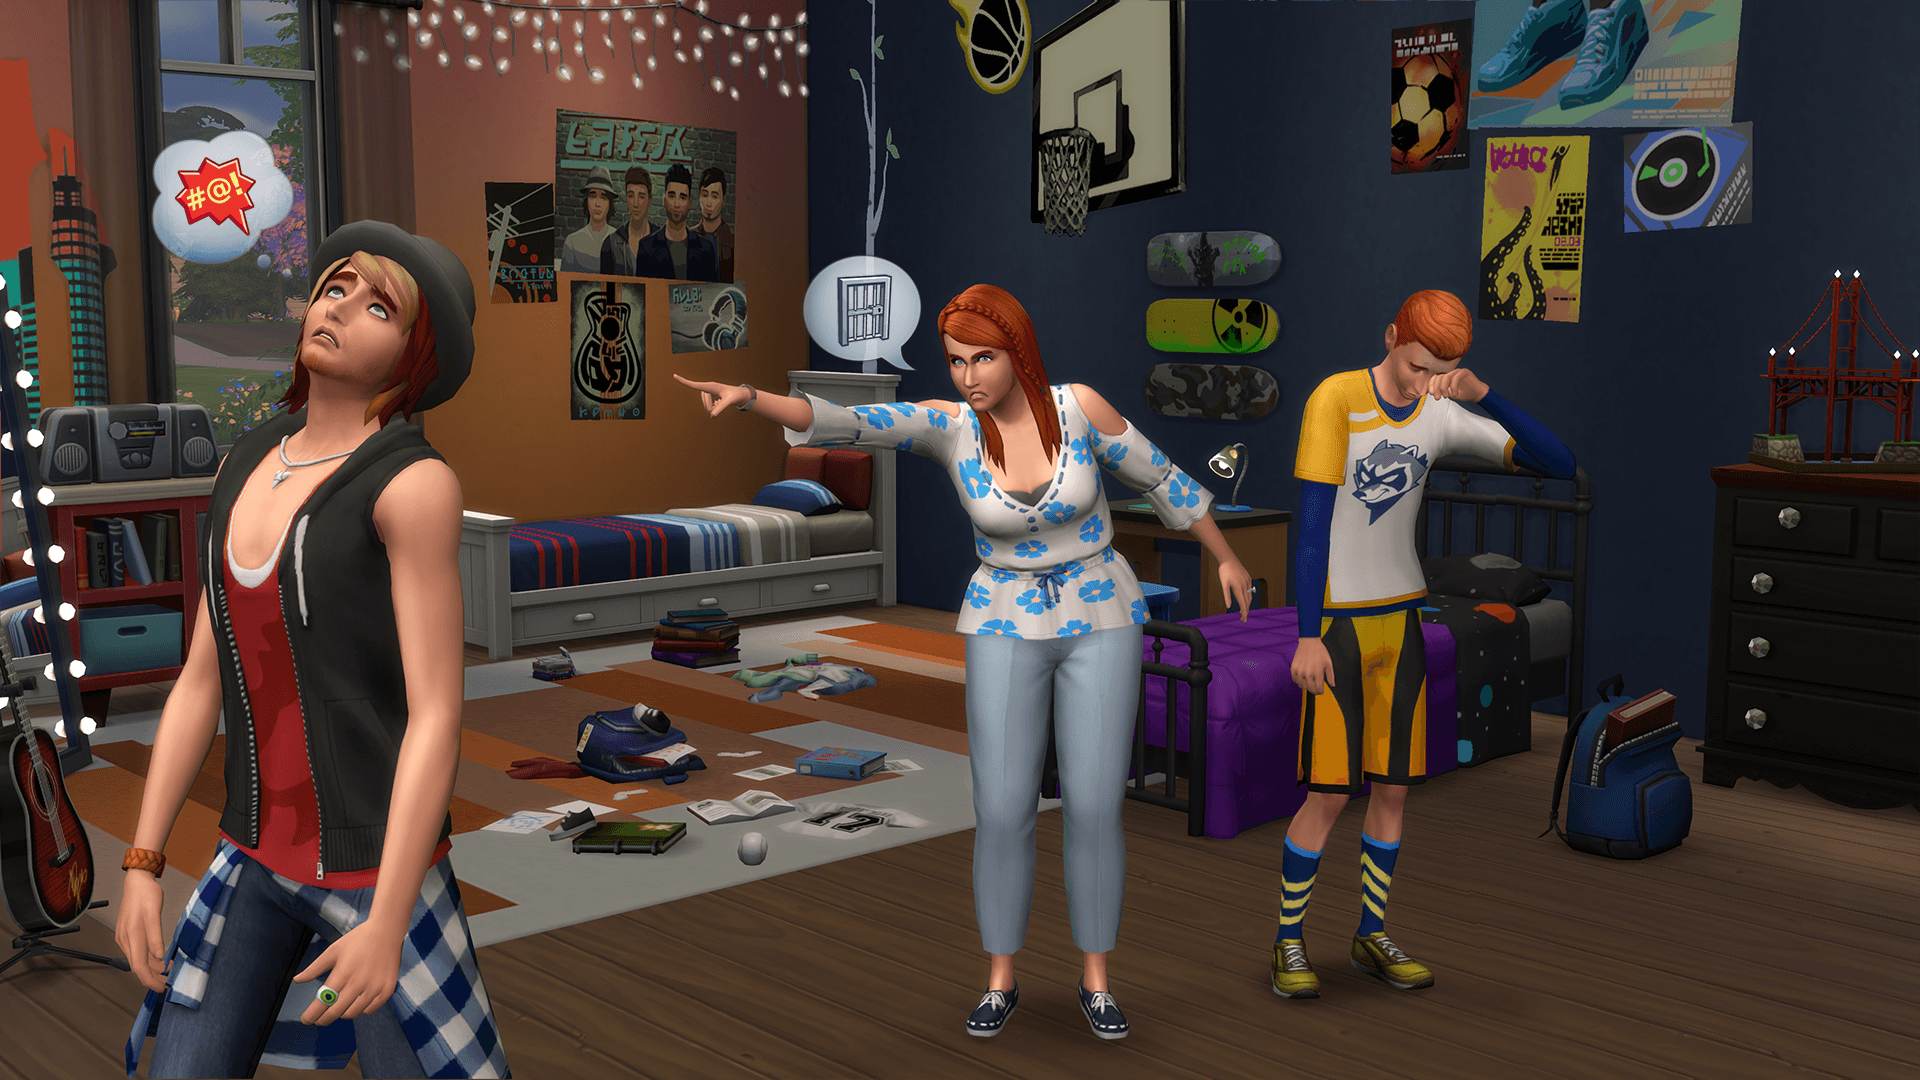 The Sims 4: Parenthood - למחשב - EXON - גיימינג ותוכנות - משחקים ותוכנות למחשב ולאקס בוקס!